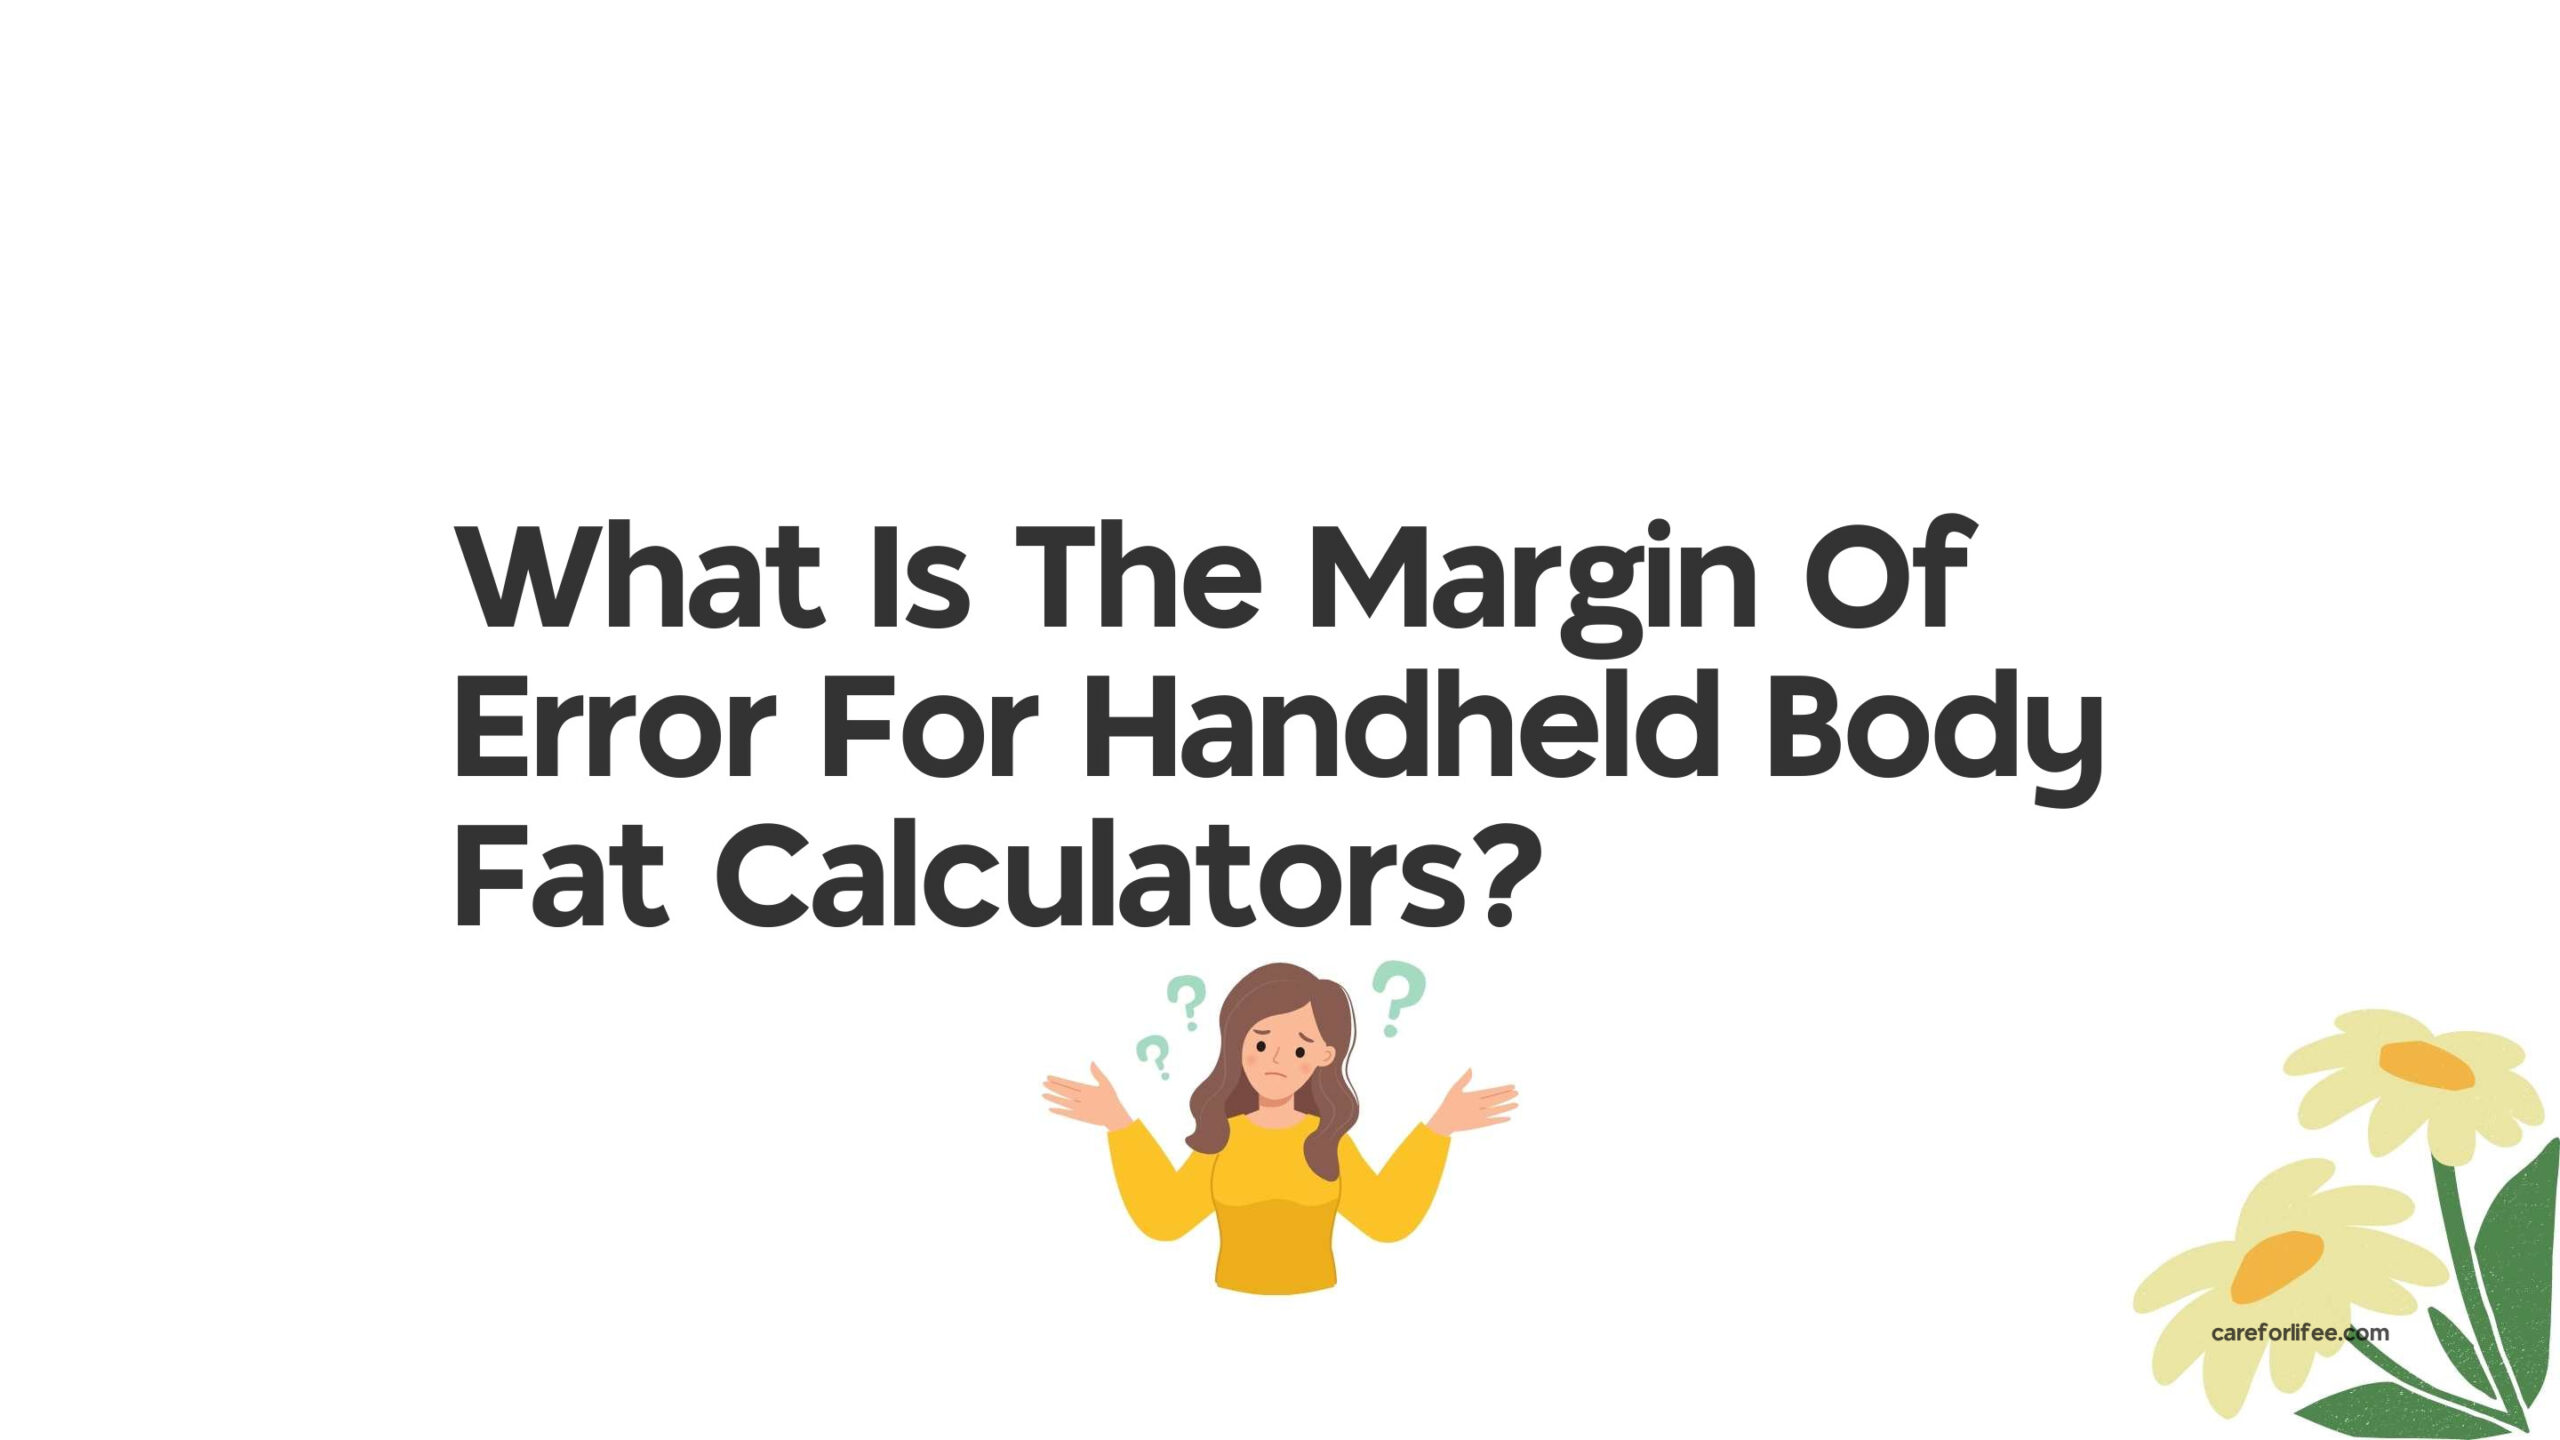 What Is The Margin Of Error For Handheld Body Fat Calculators?